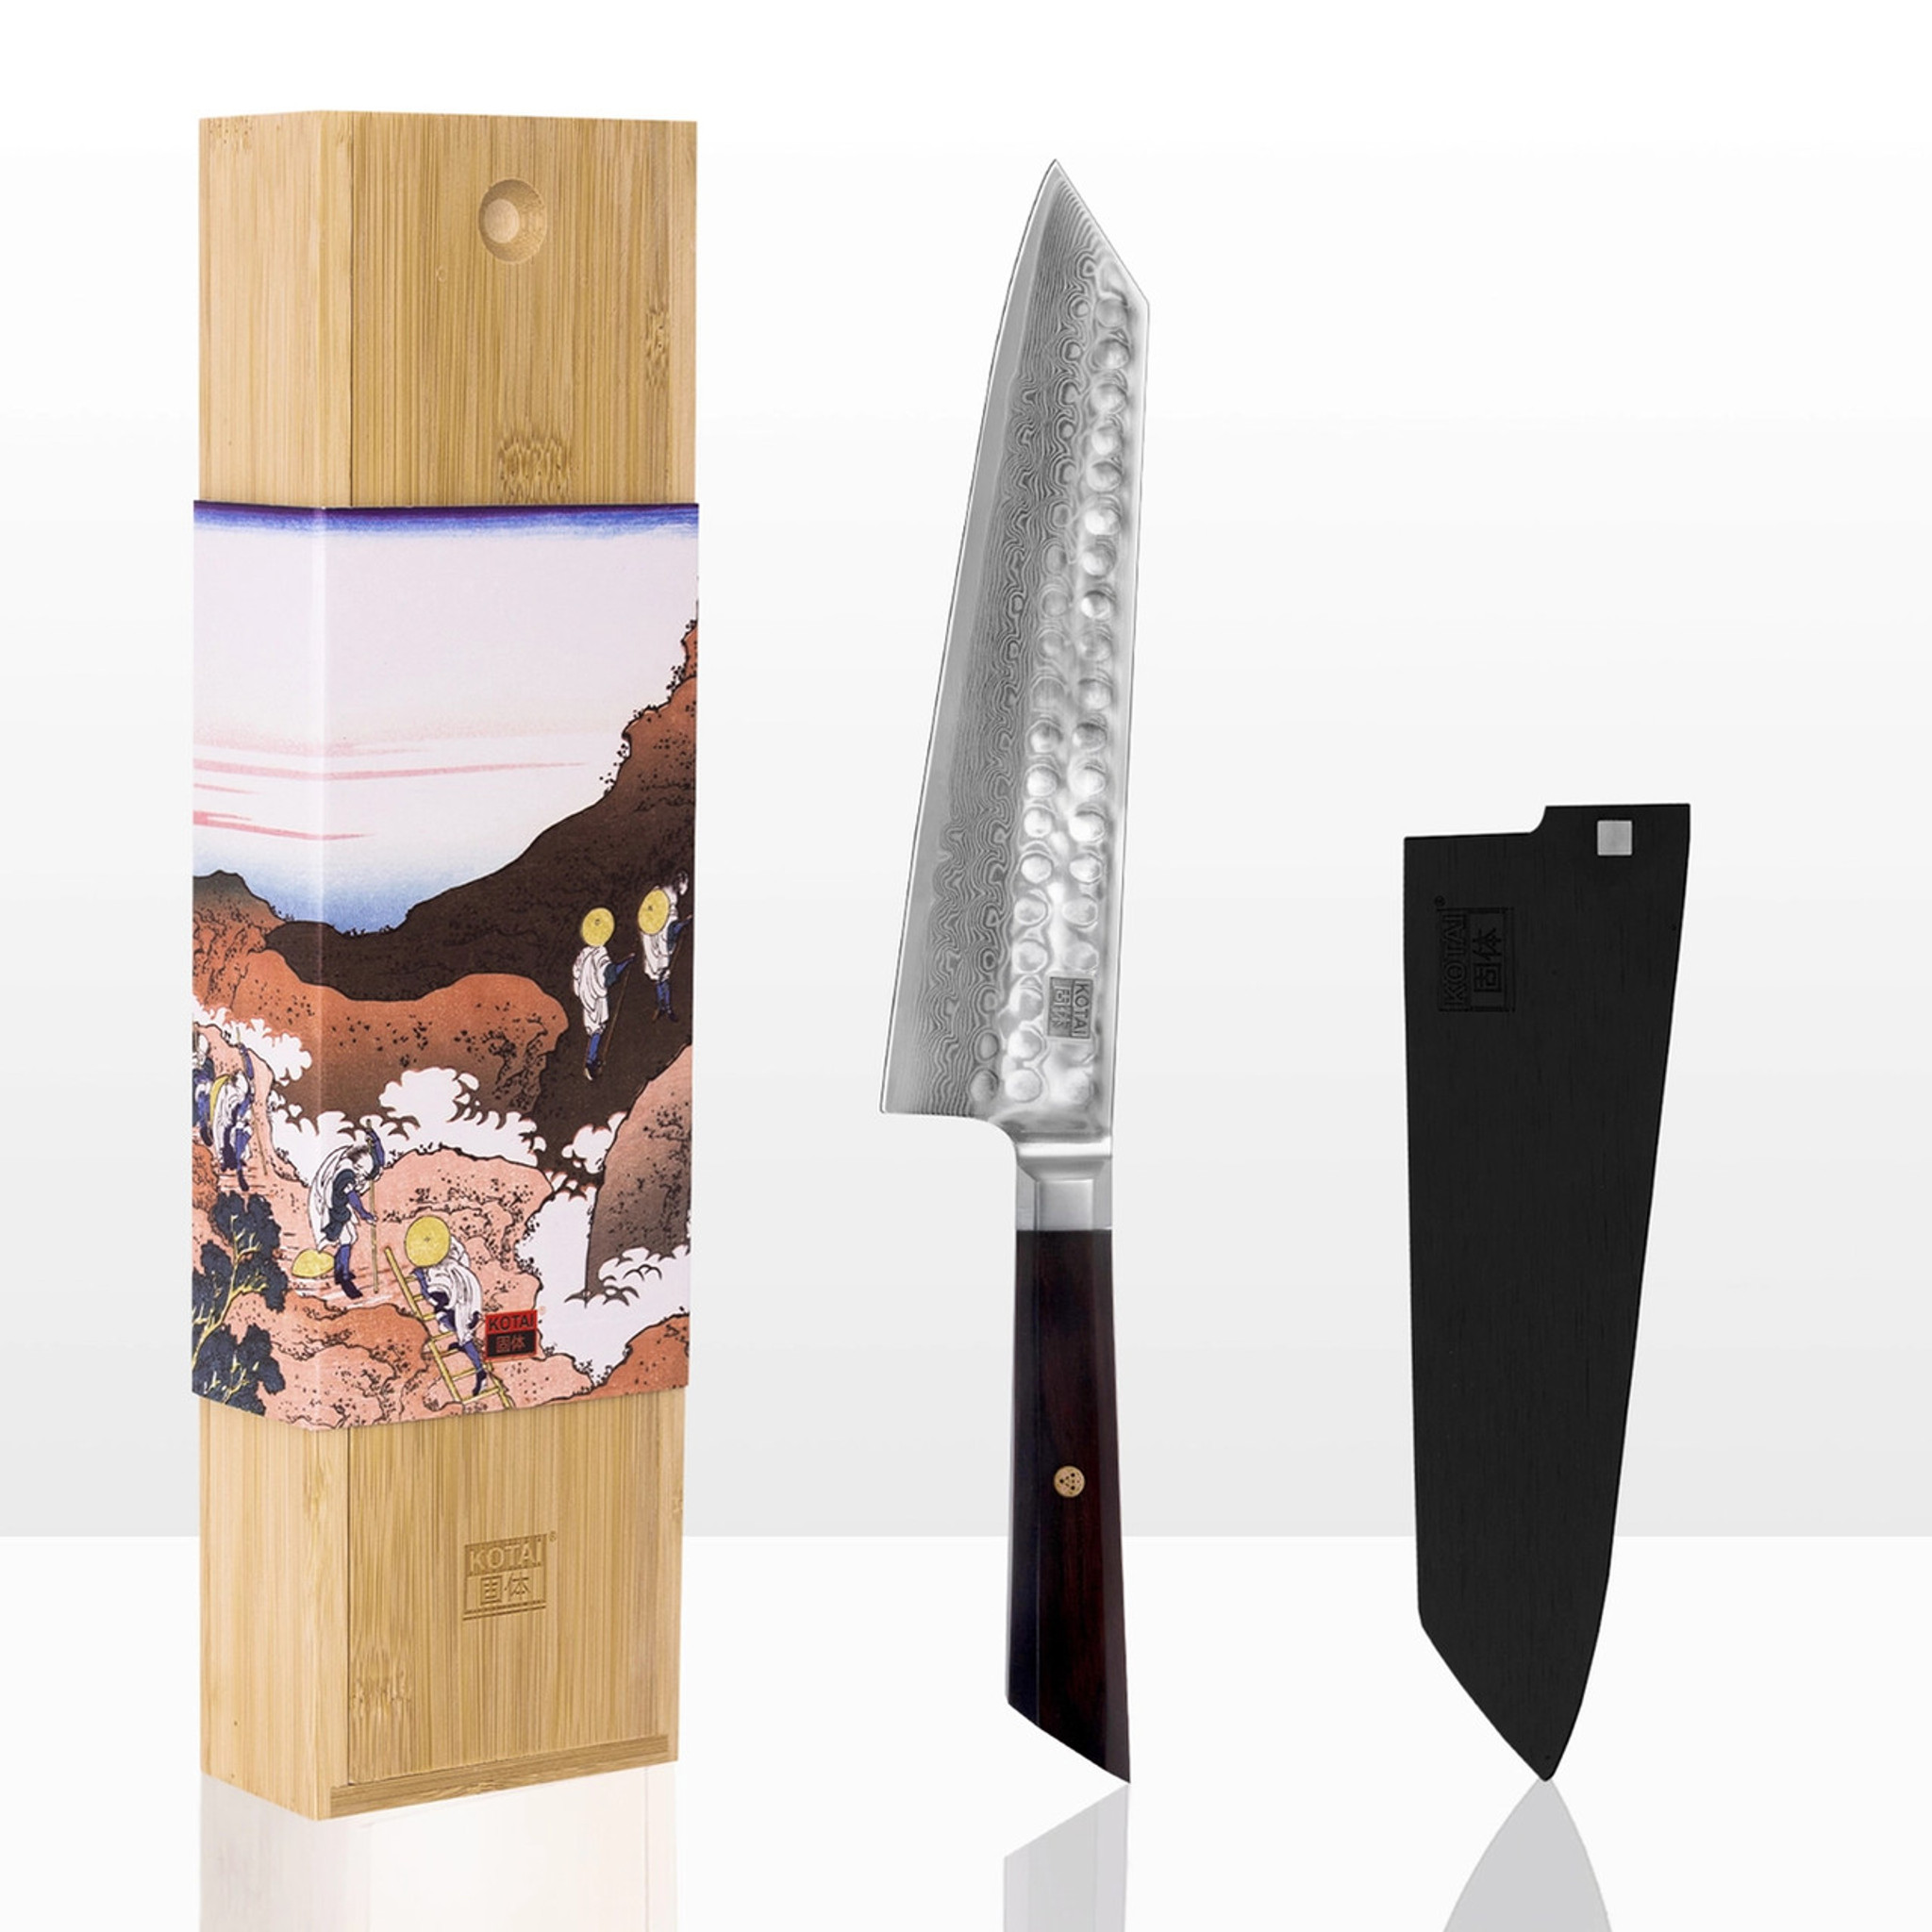 KOTAI Damascus Kiritsuke Knife - Bunka Collection - 8" Blade + Gift Box 